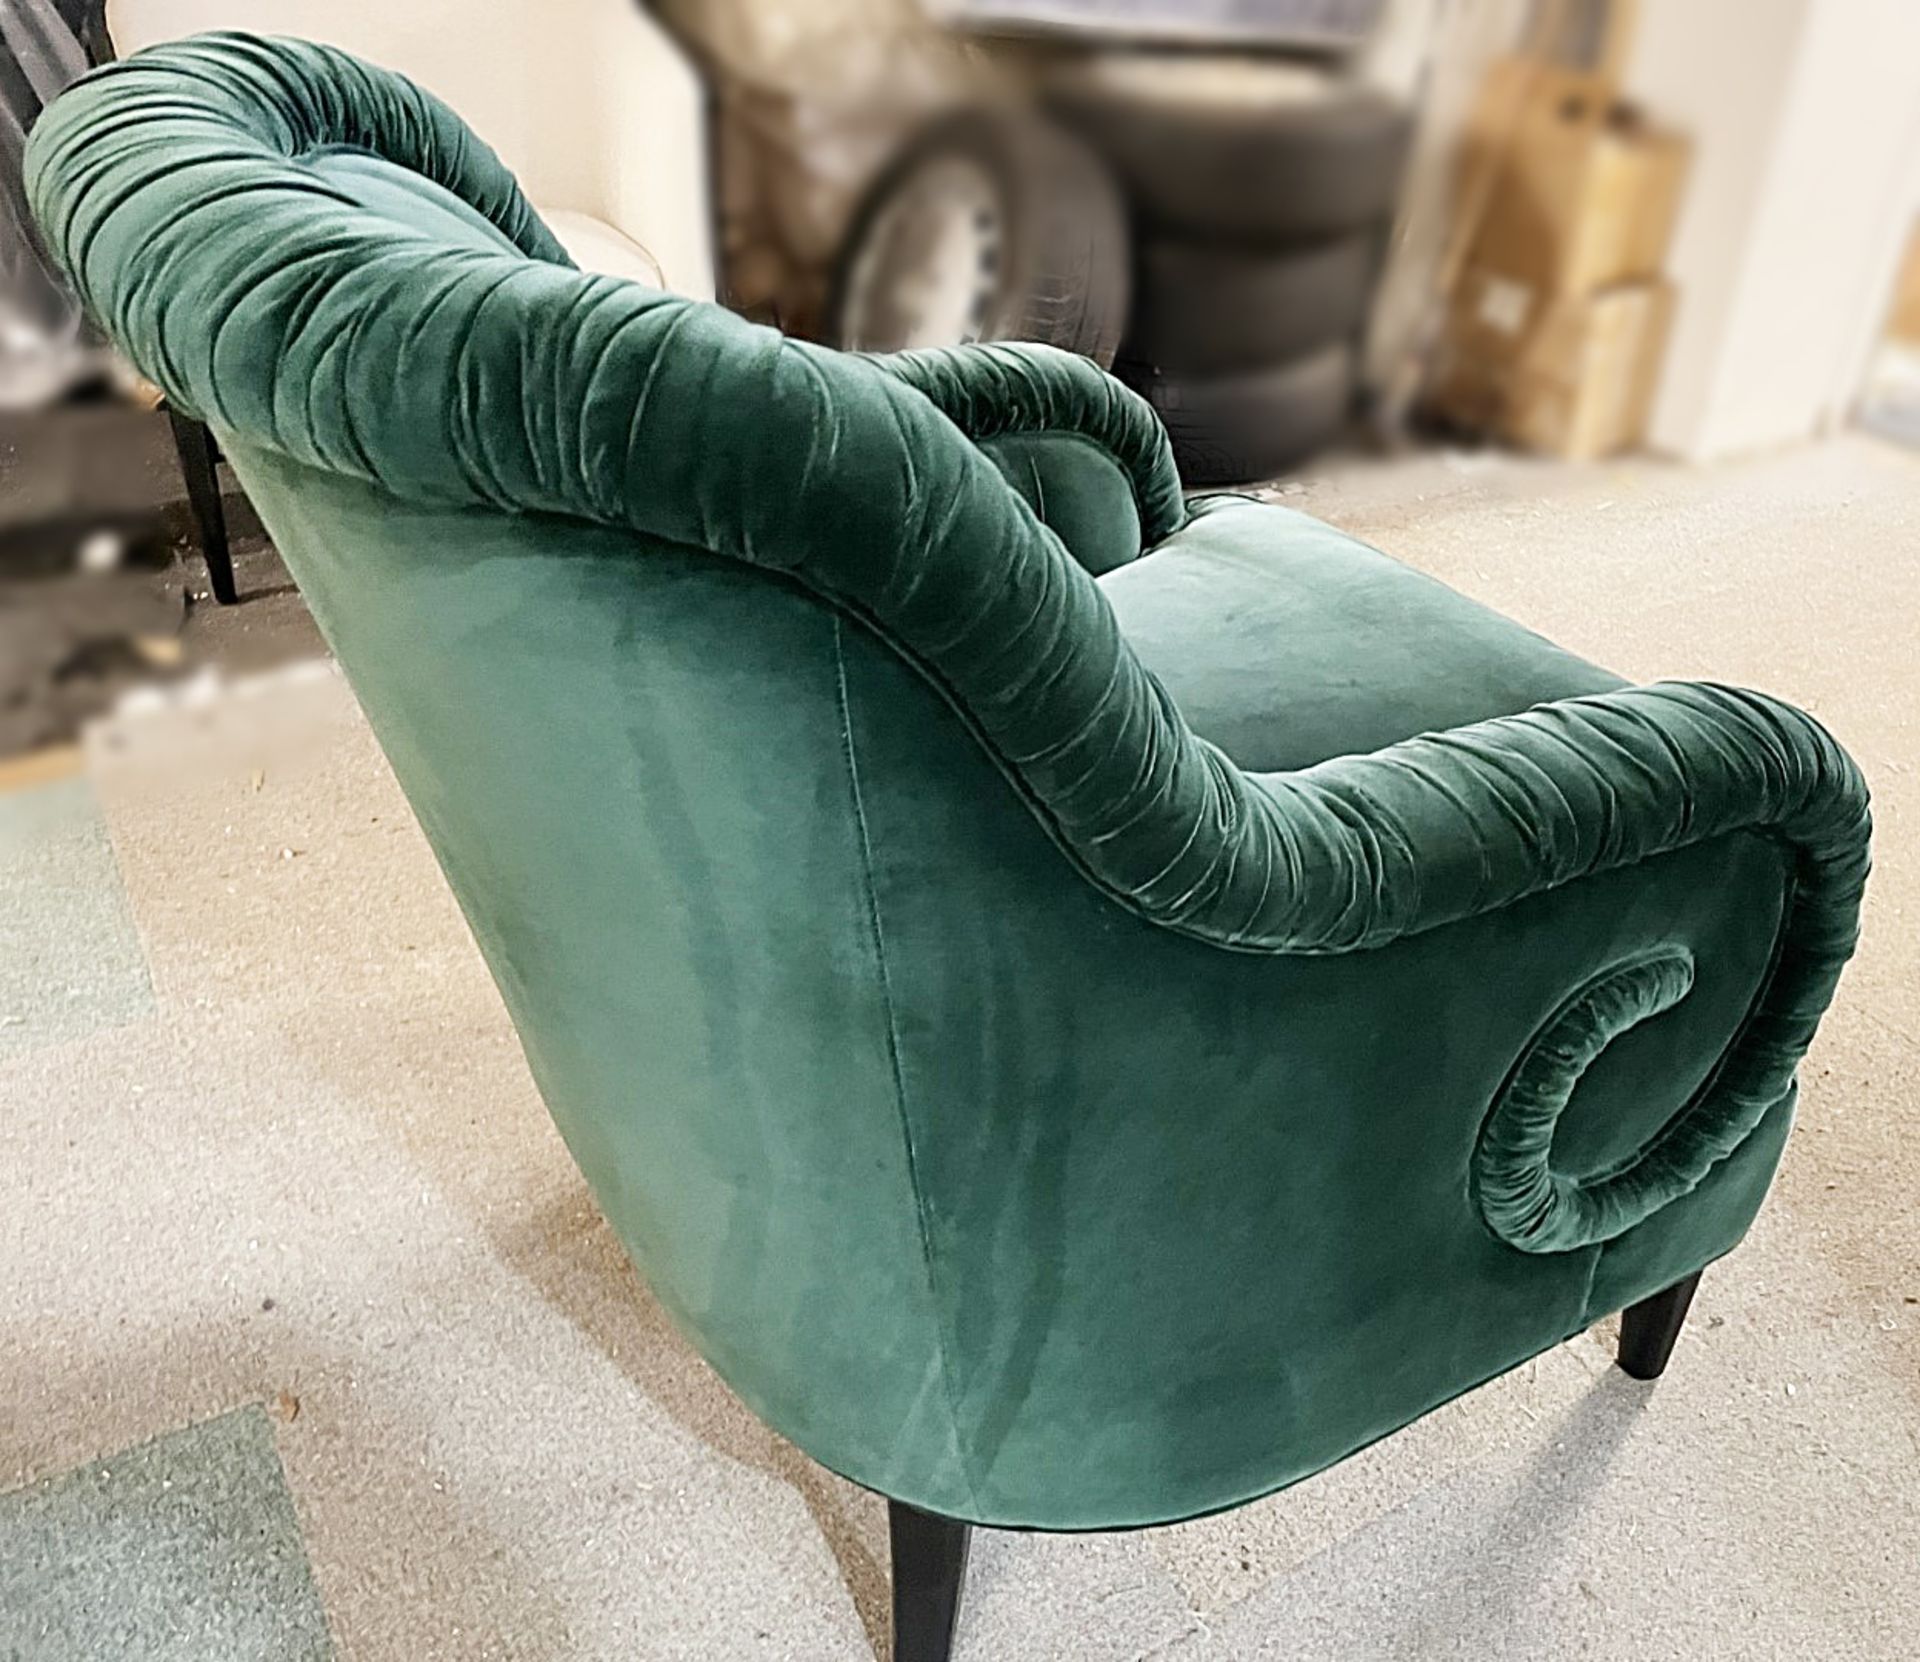 1 x Sumptuous Luxury Deep Green Velvet Upholstered Armchair - Original RRP £1,495 - Image 3 of 7